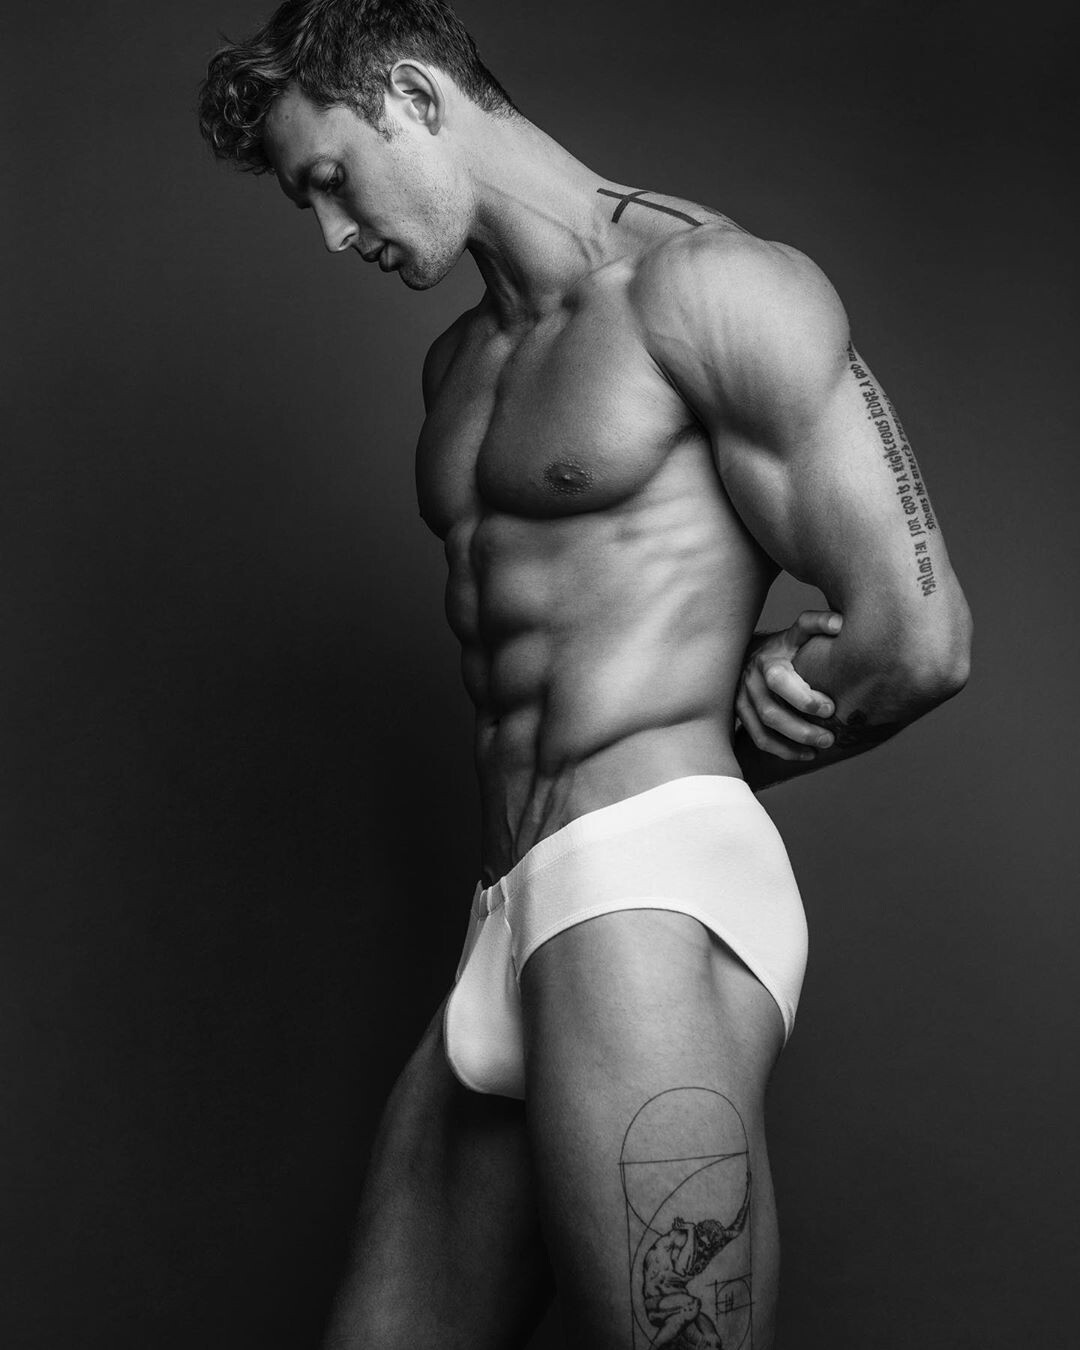 Supermodel Christian Hogue in black speedos and white briefs. damnnnn that ...